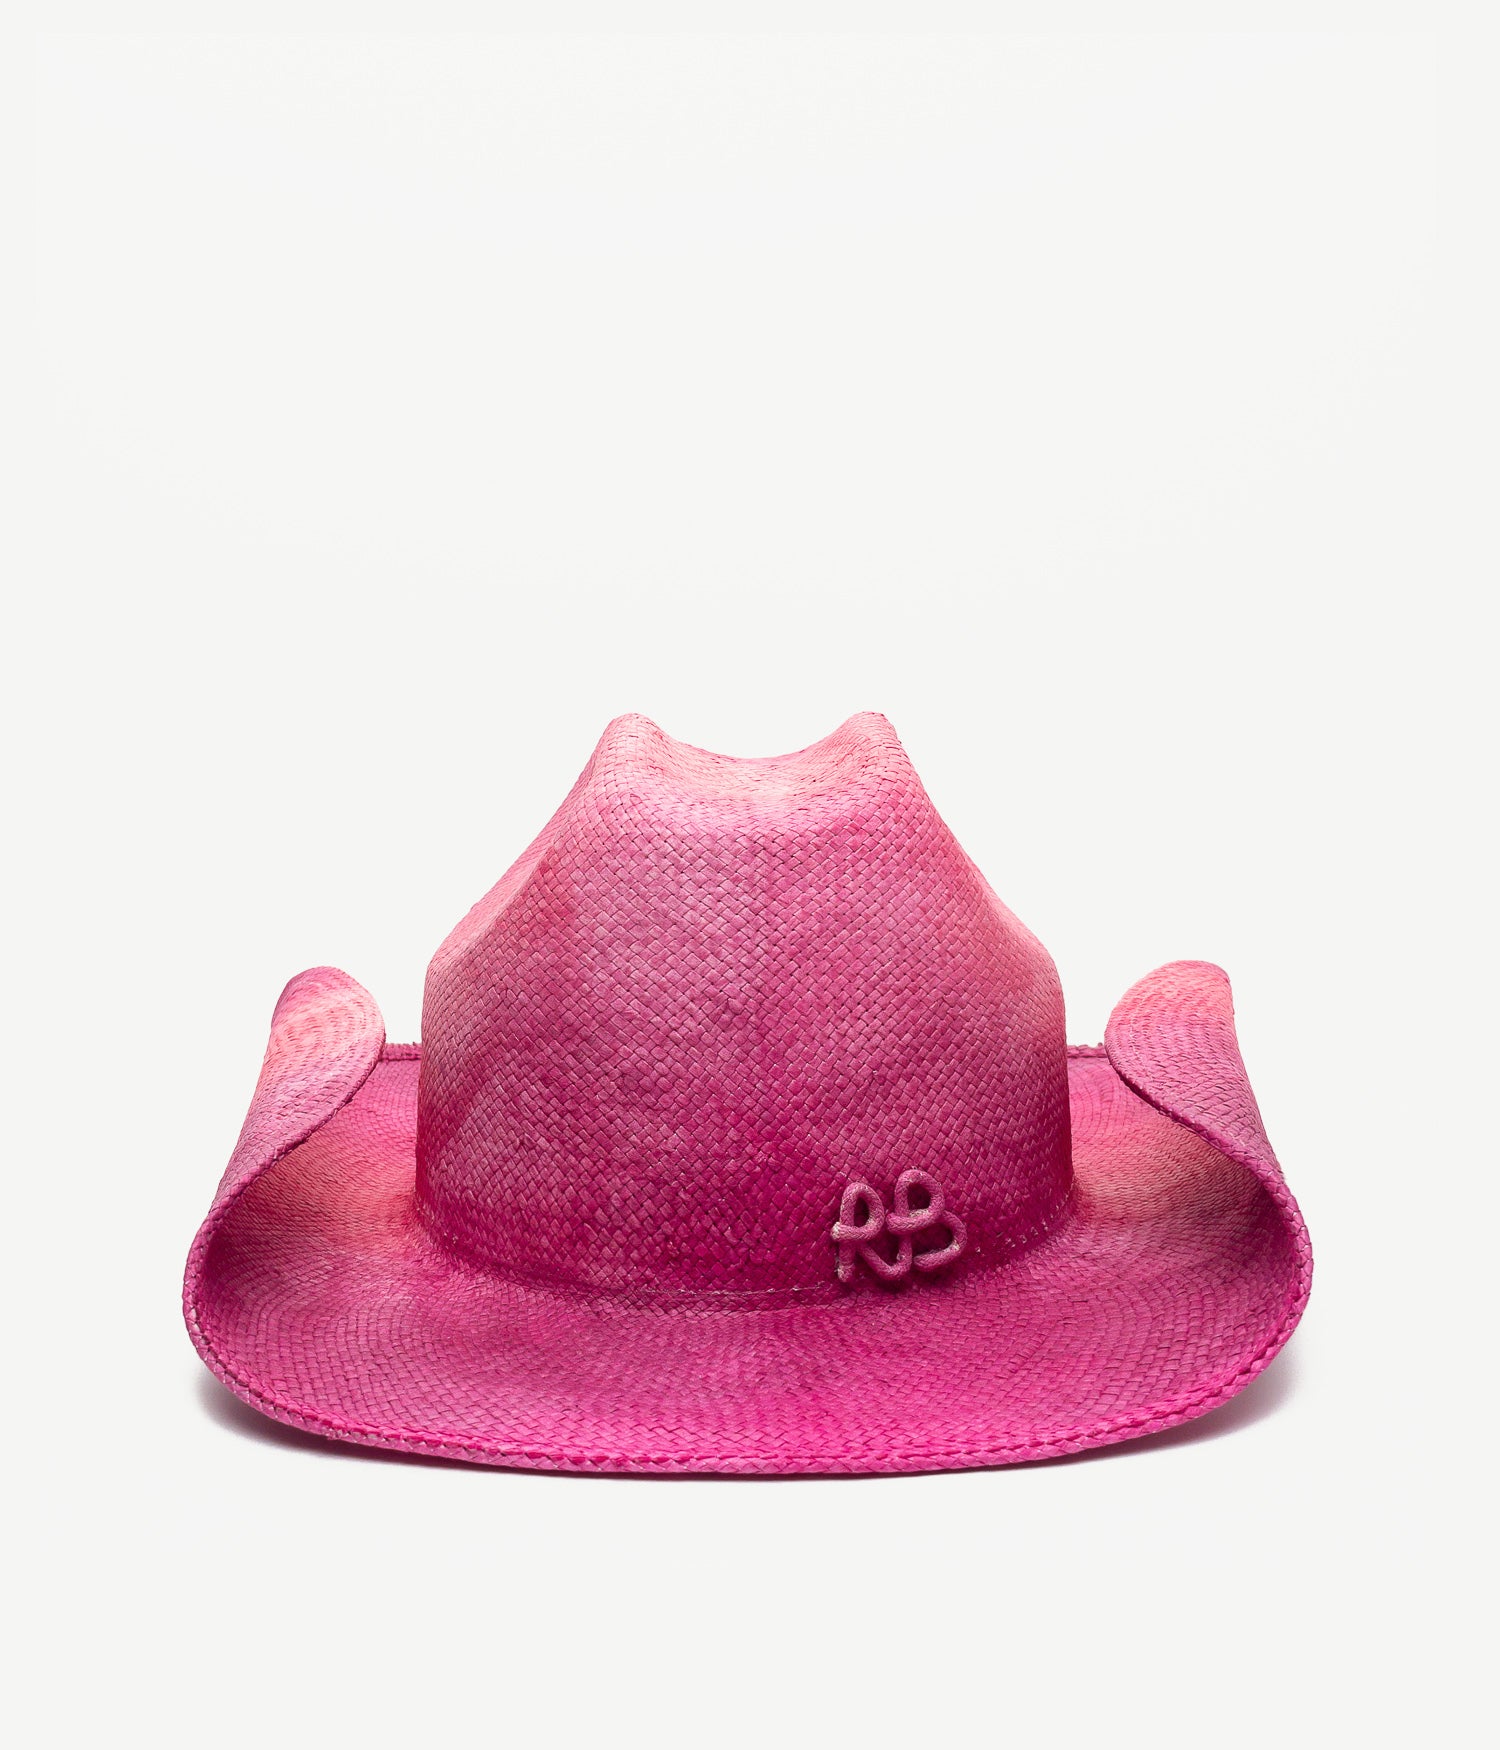 Dyed Cowboy Hat